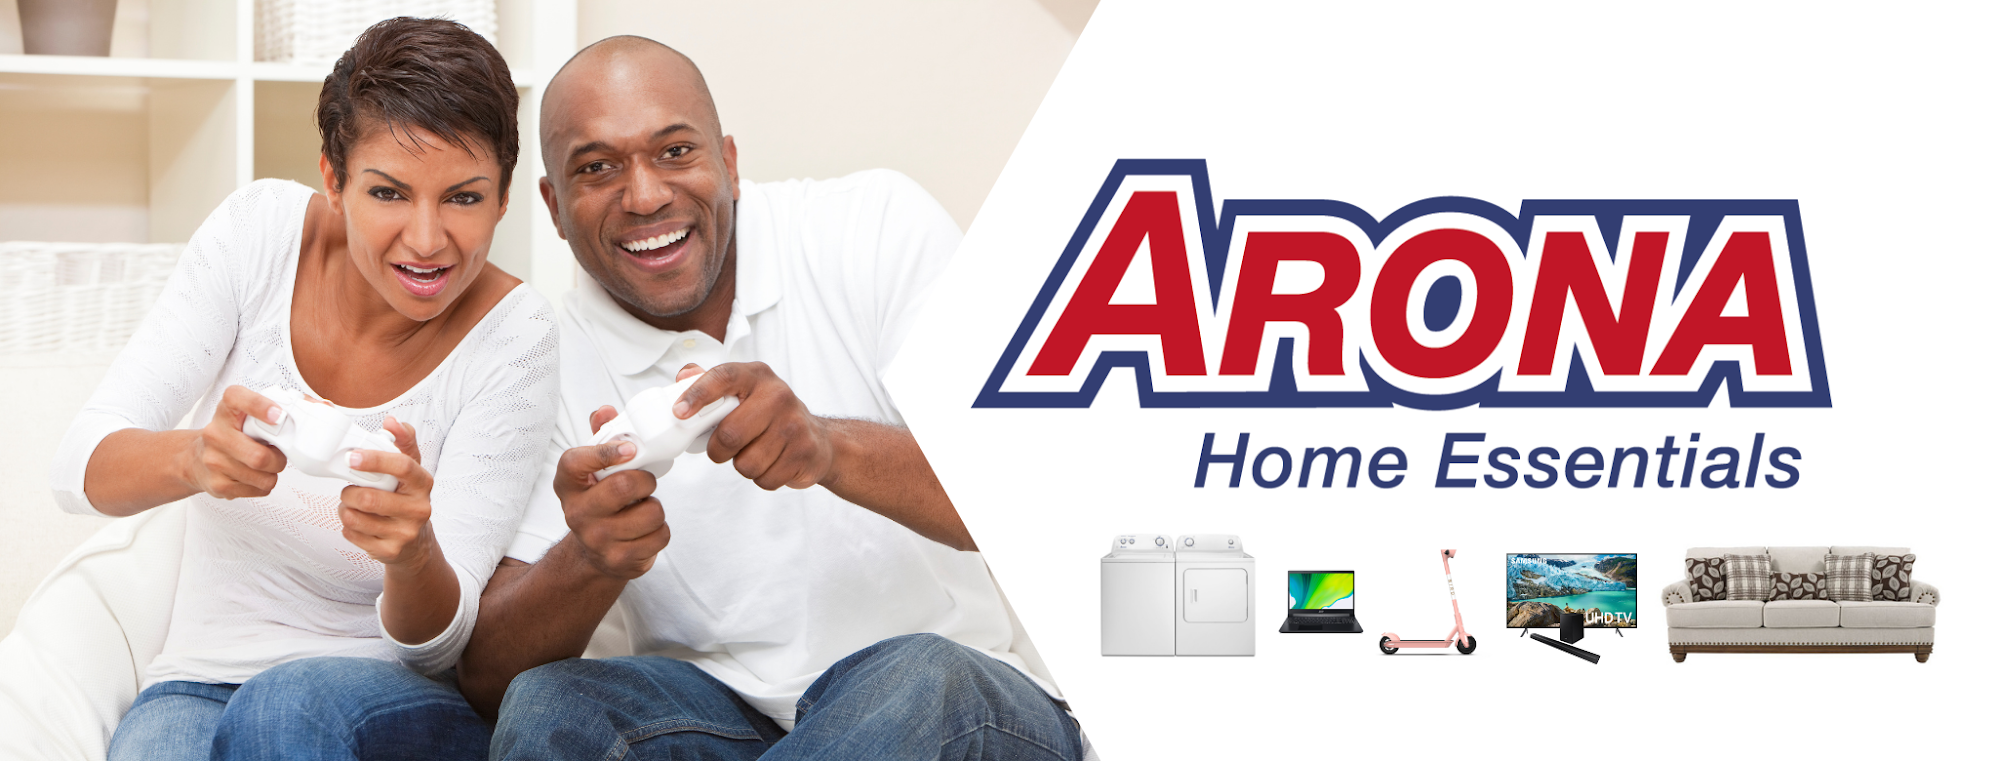 Arona Home Essentials Midland